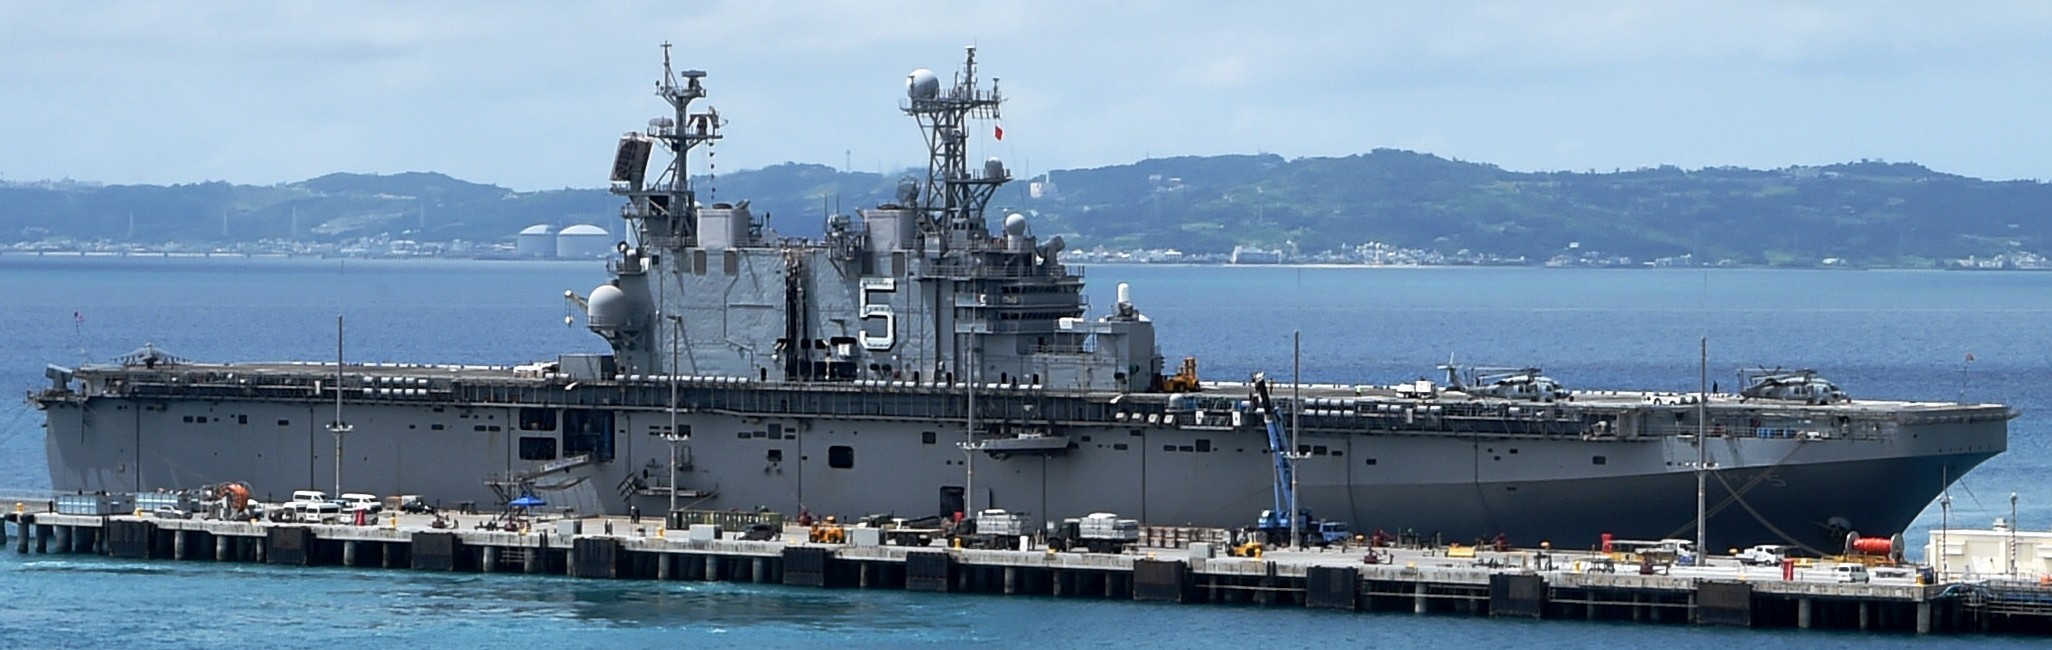 lha-5 uss peleliu tarawa class amphibious assault ship landing helicopter us navy naval base white beach okinawa japan 128